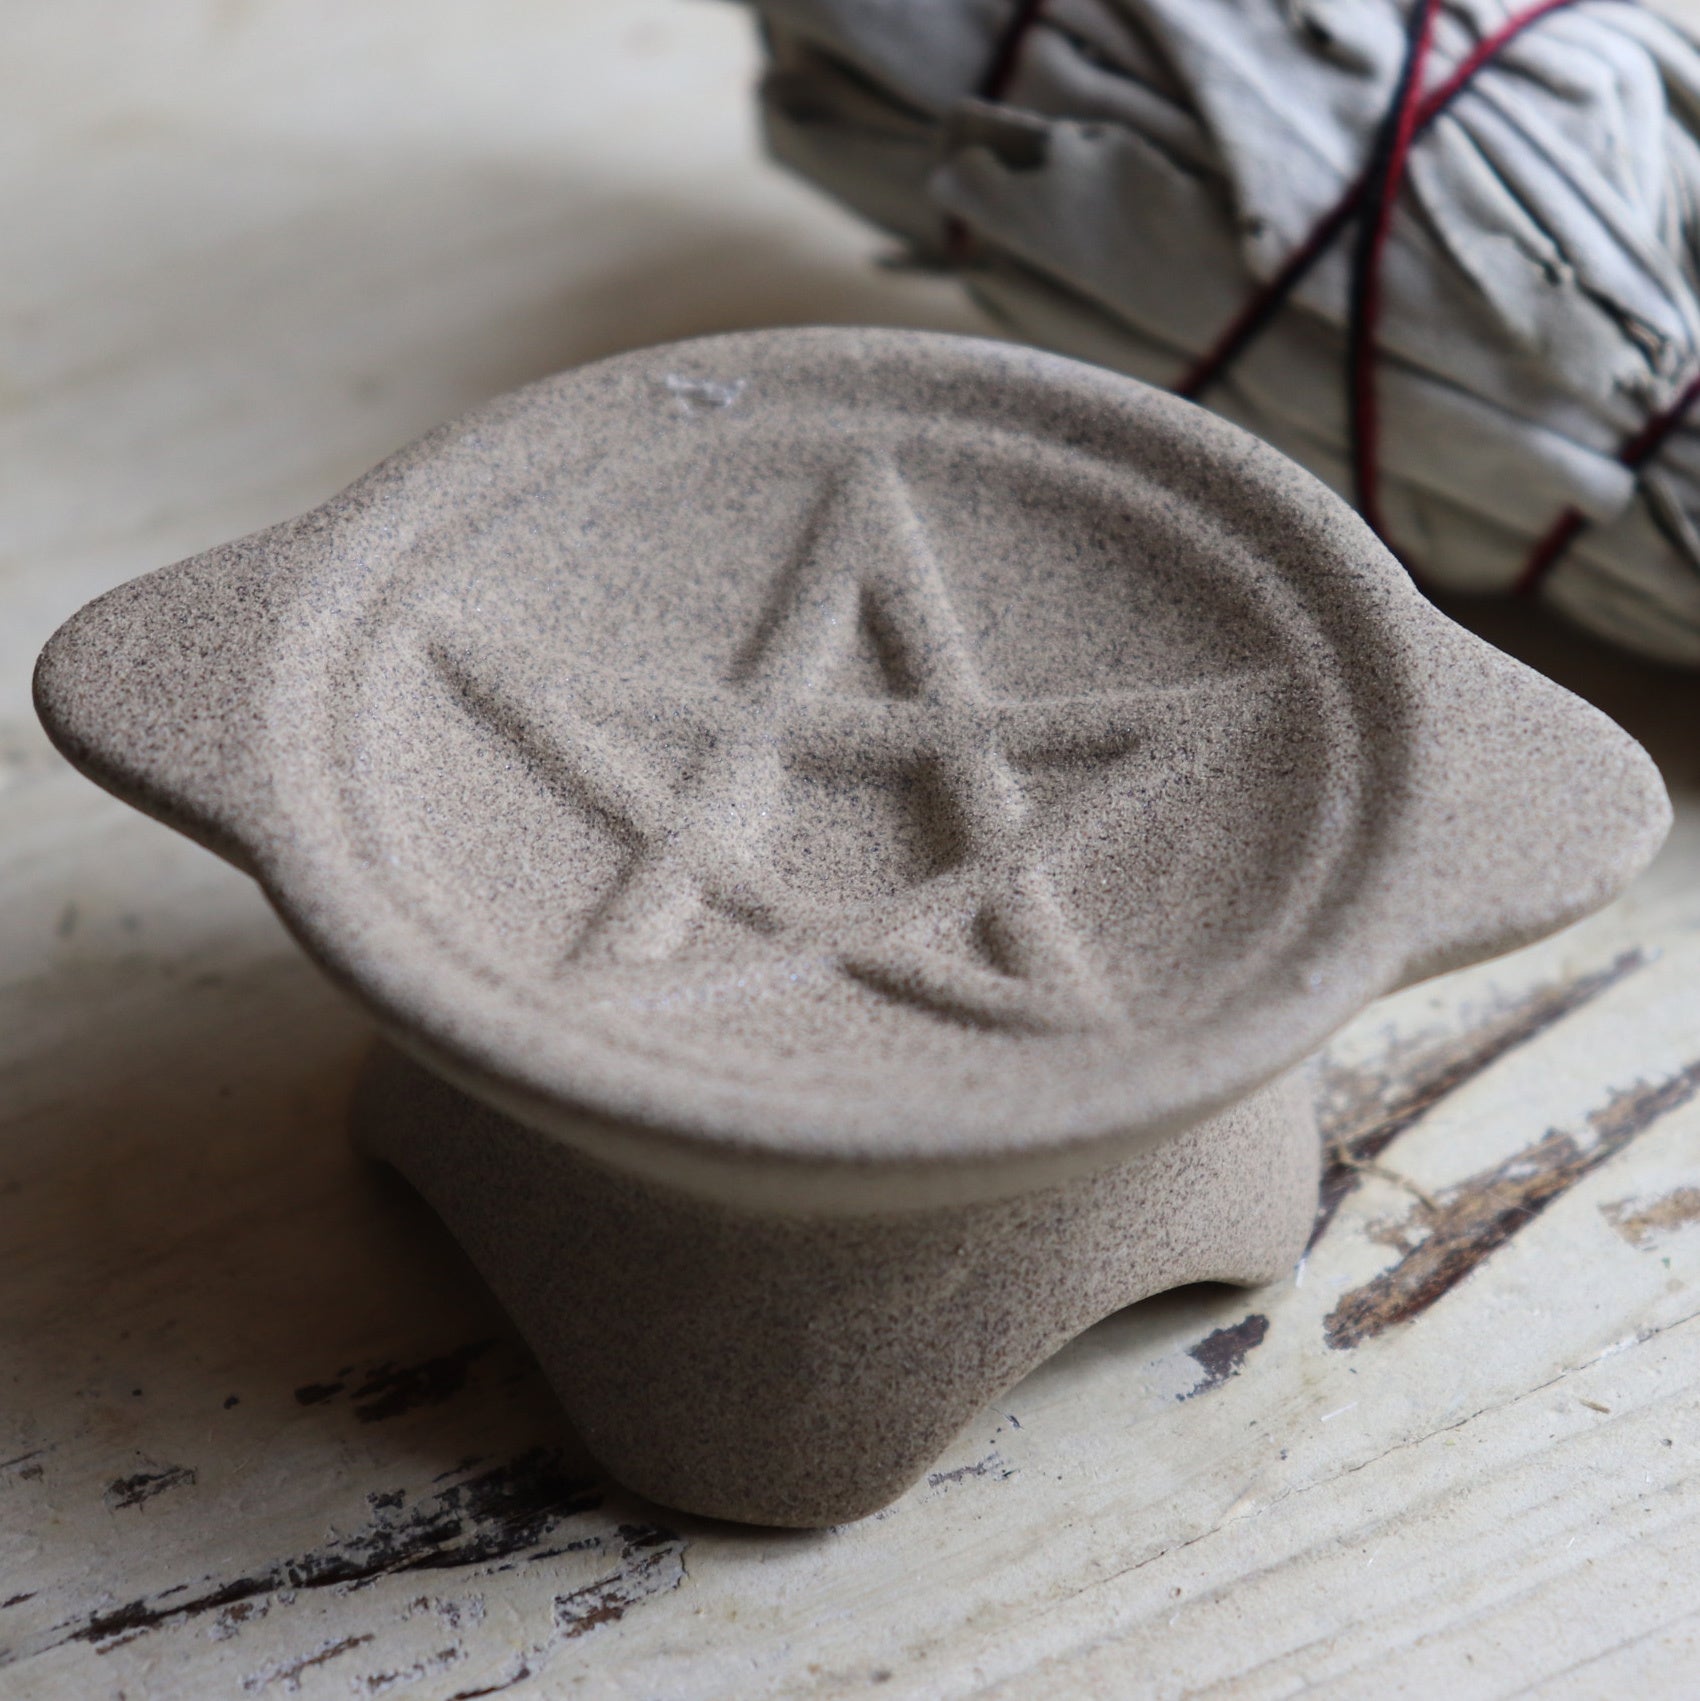 Pentagram ceramic resin and incense cone burner - The Spirit of Life